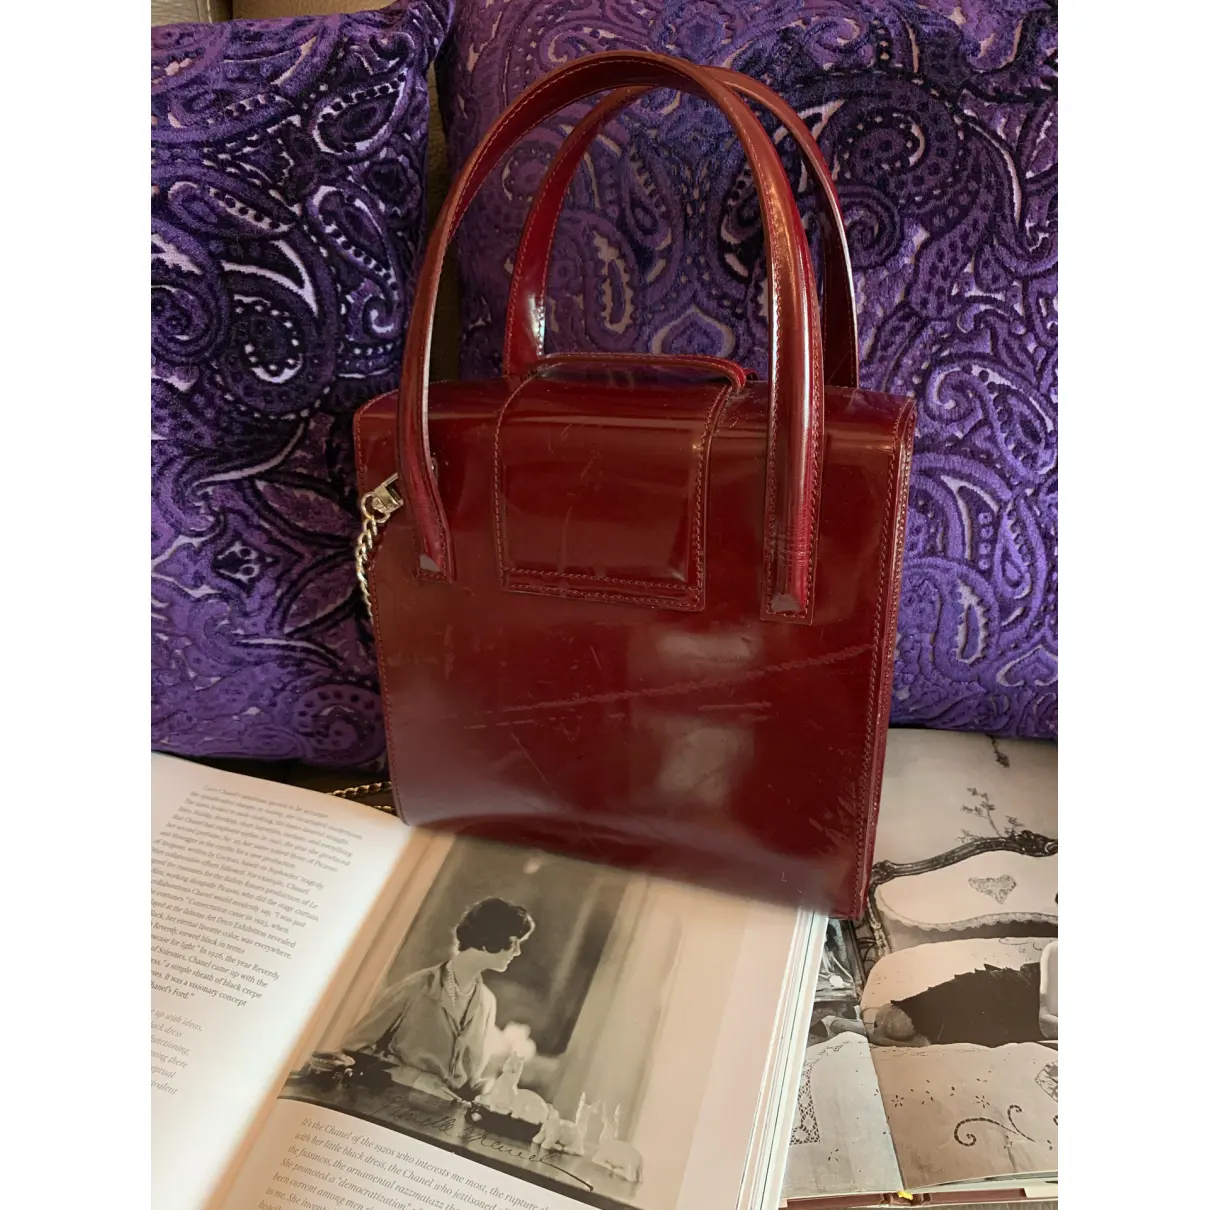 Buy Cartier Panthère leather handbag online - Vintage